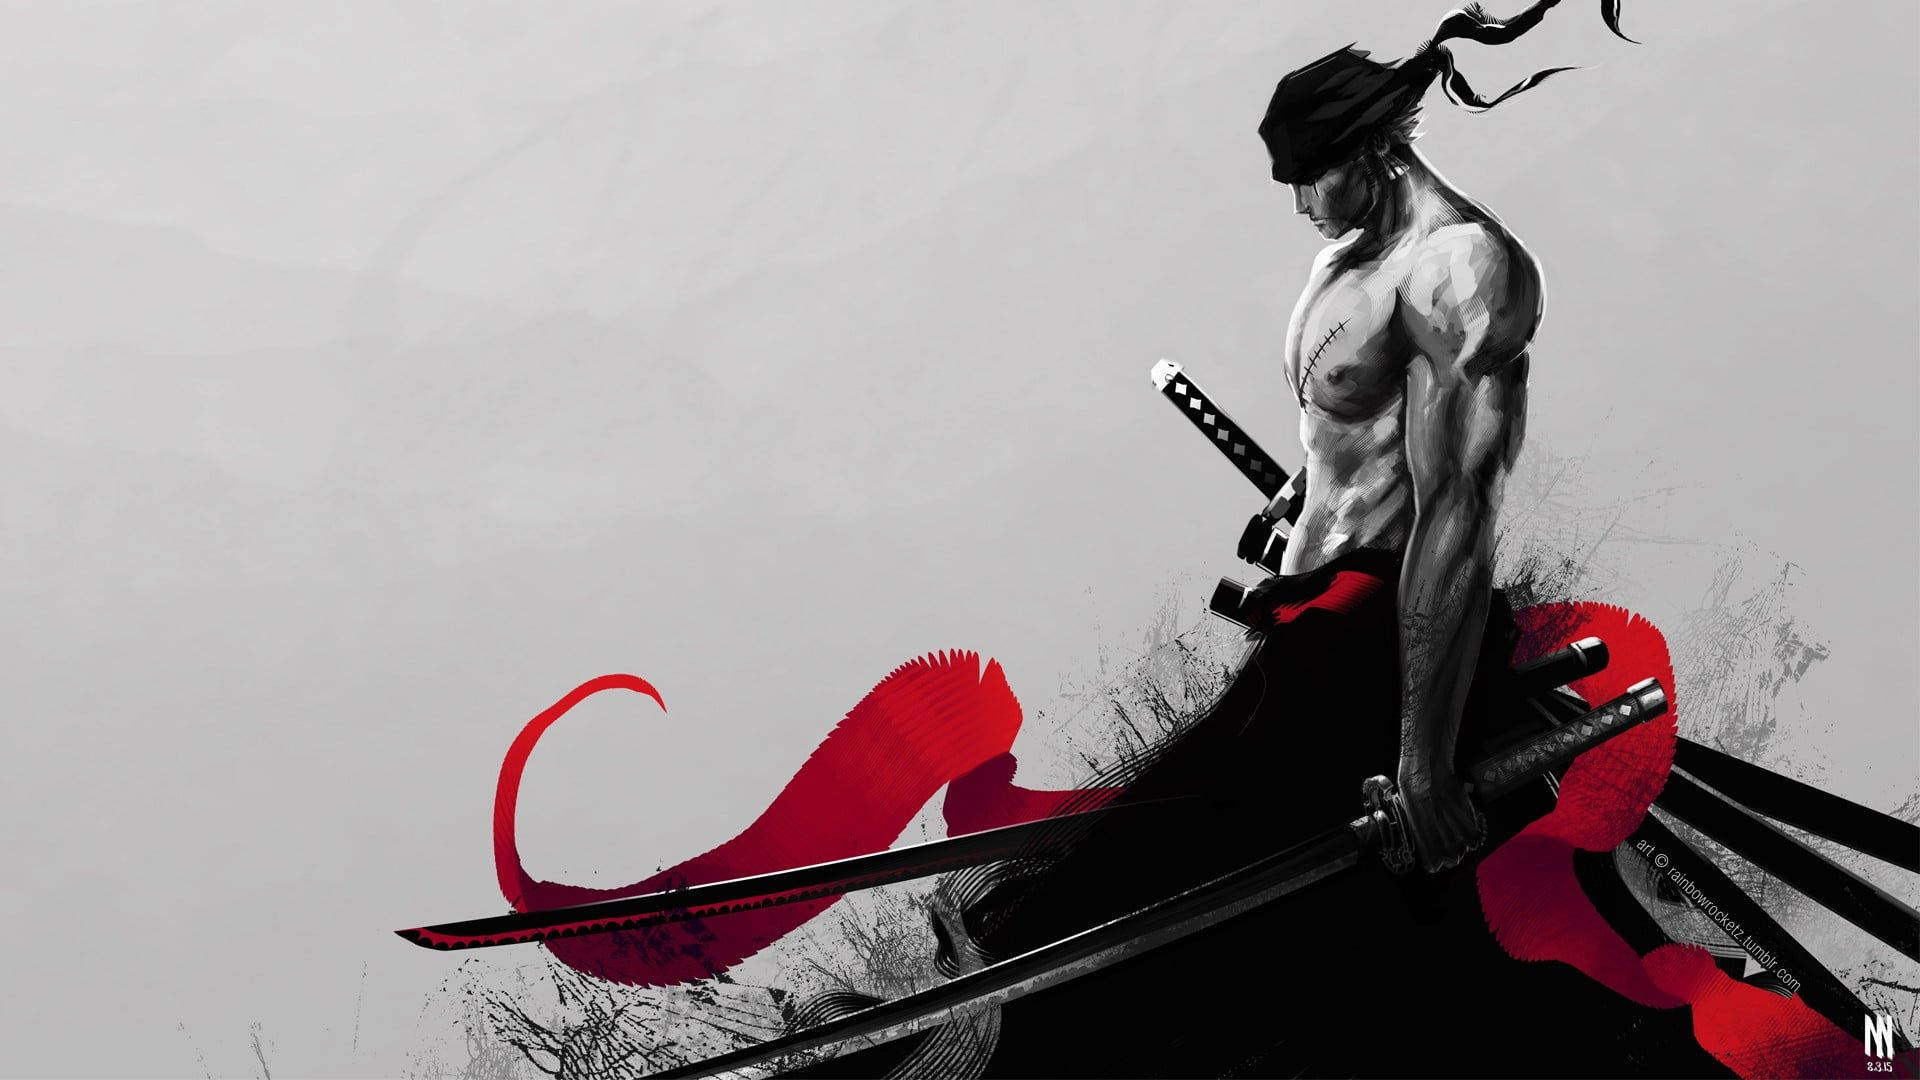 Image Zoro, The Fictional Swordsman, Sheaths His Two Katanas. Background